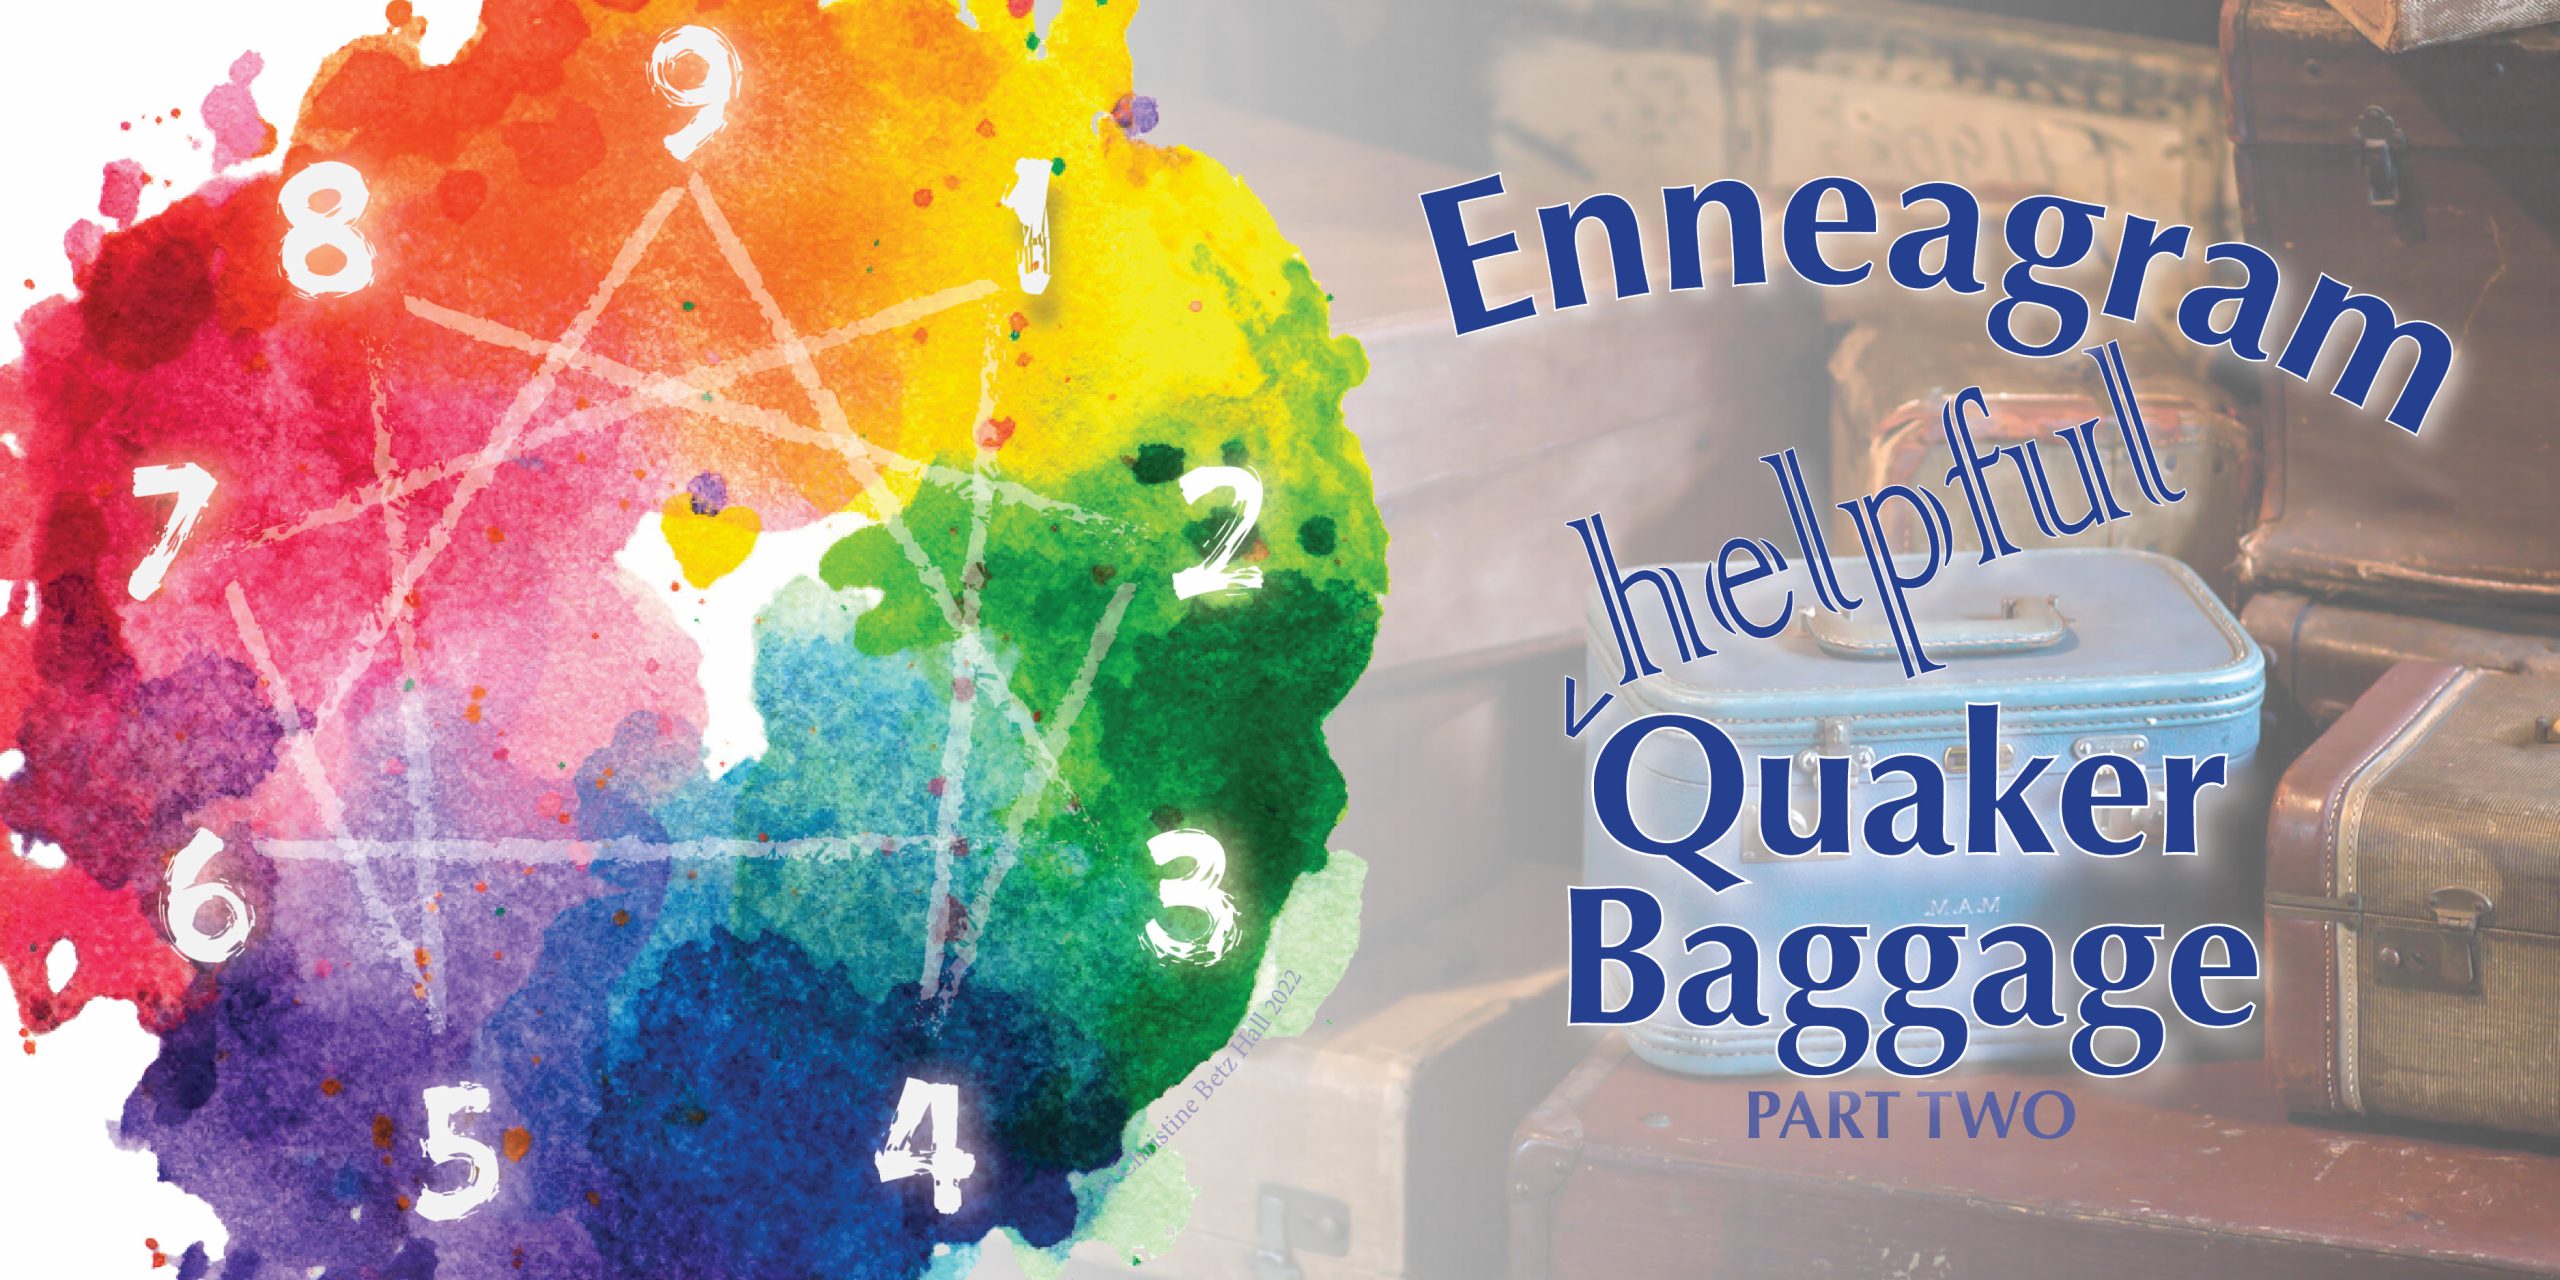 Enneagram Quaker Baggage Banner Image